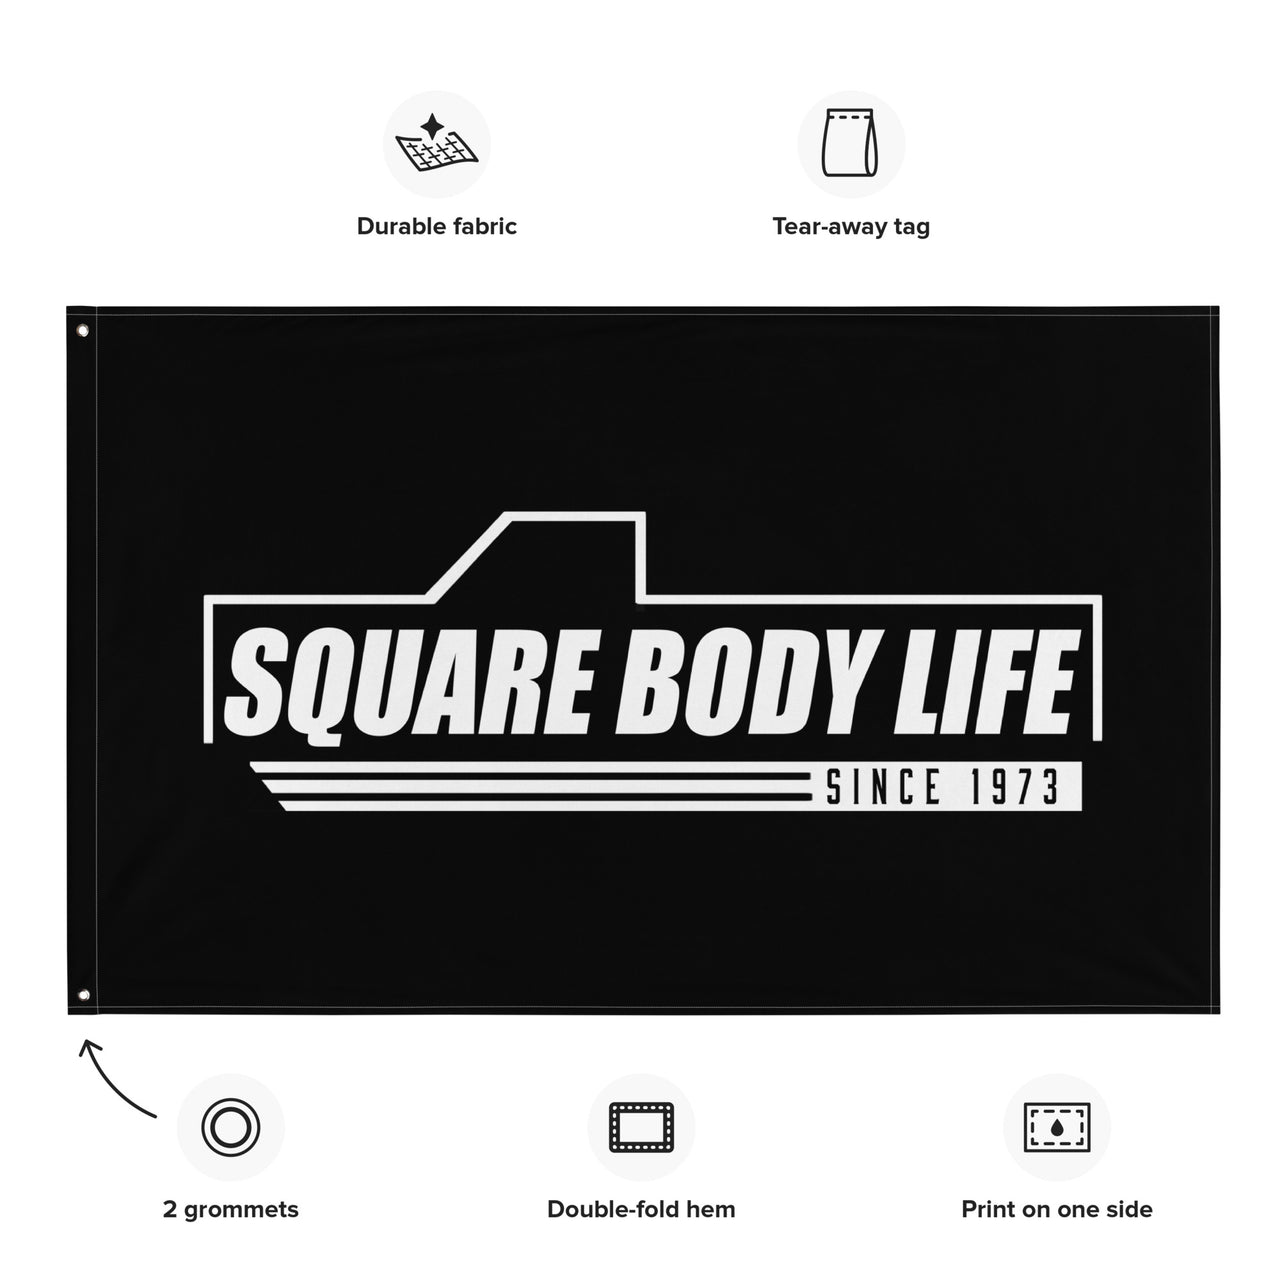 Square body Life Flag details